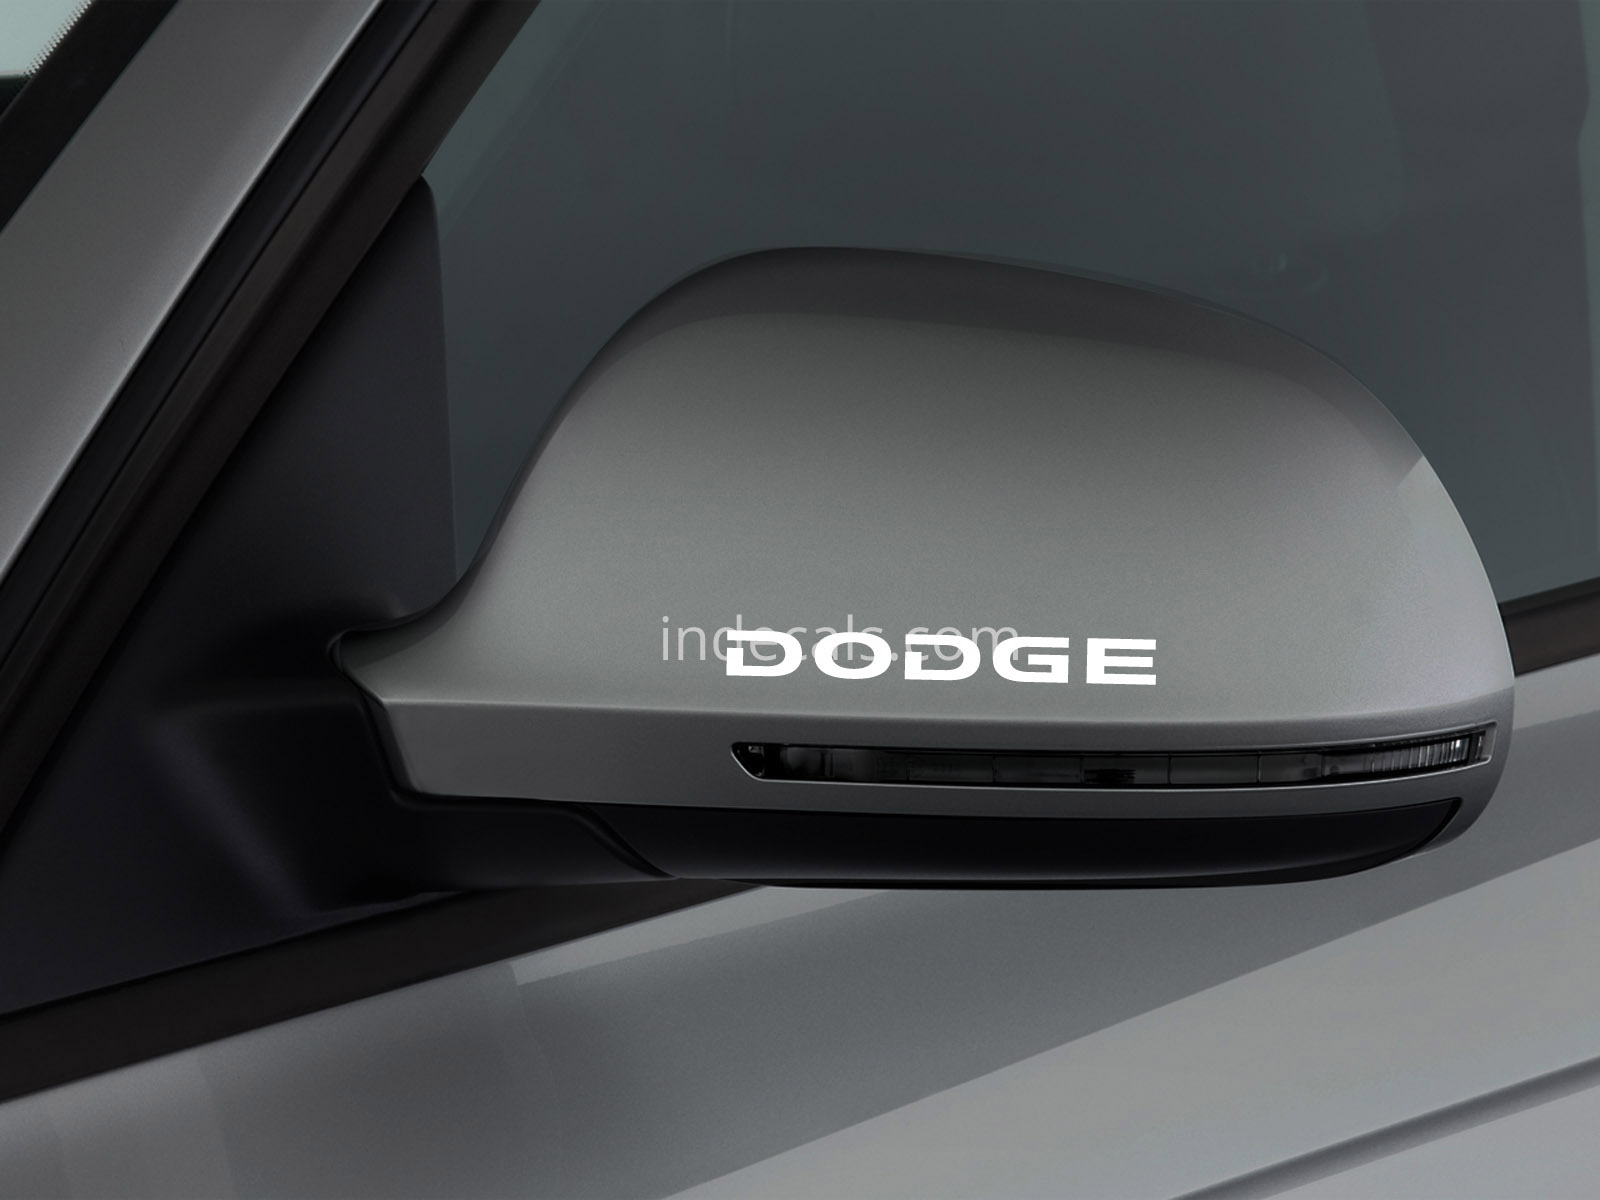 3 x Dodge Stickers for Mirror - White